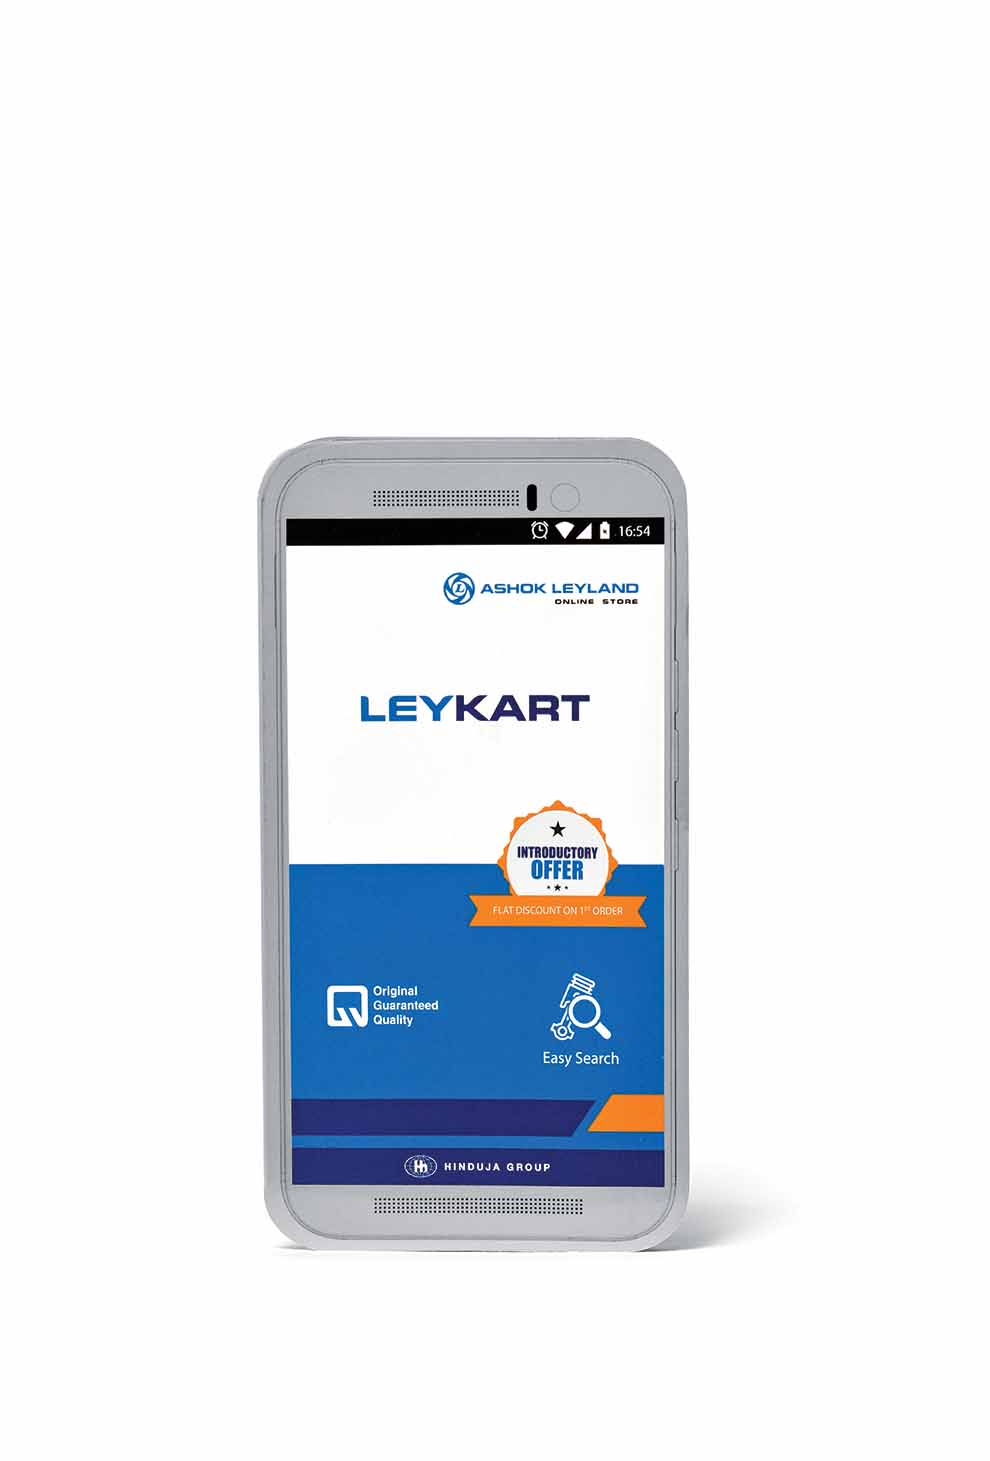 Ashok Leyland’ digital path to growth